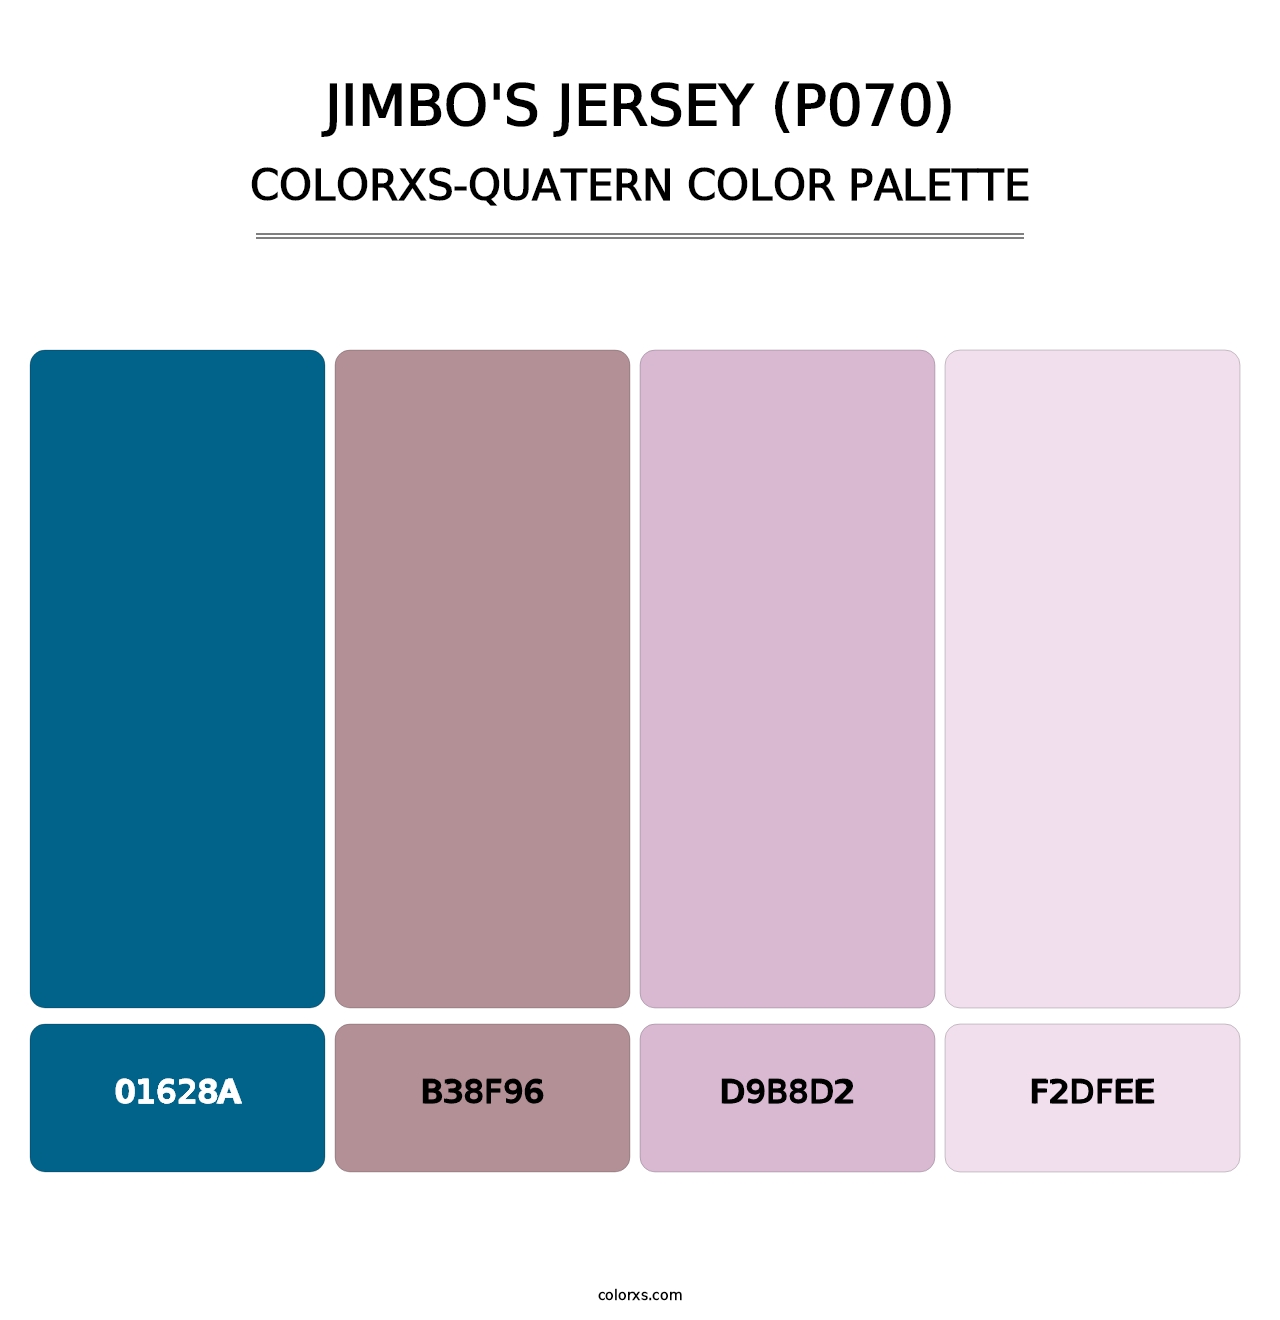 Jimbo's Jersey (P070) - Colorxs Quatern Palette